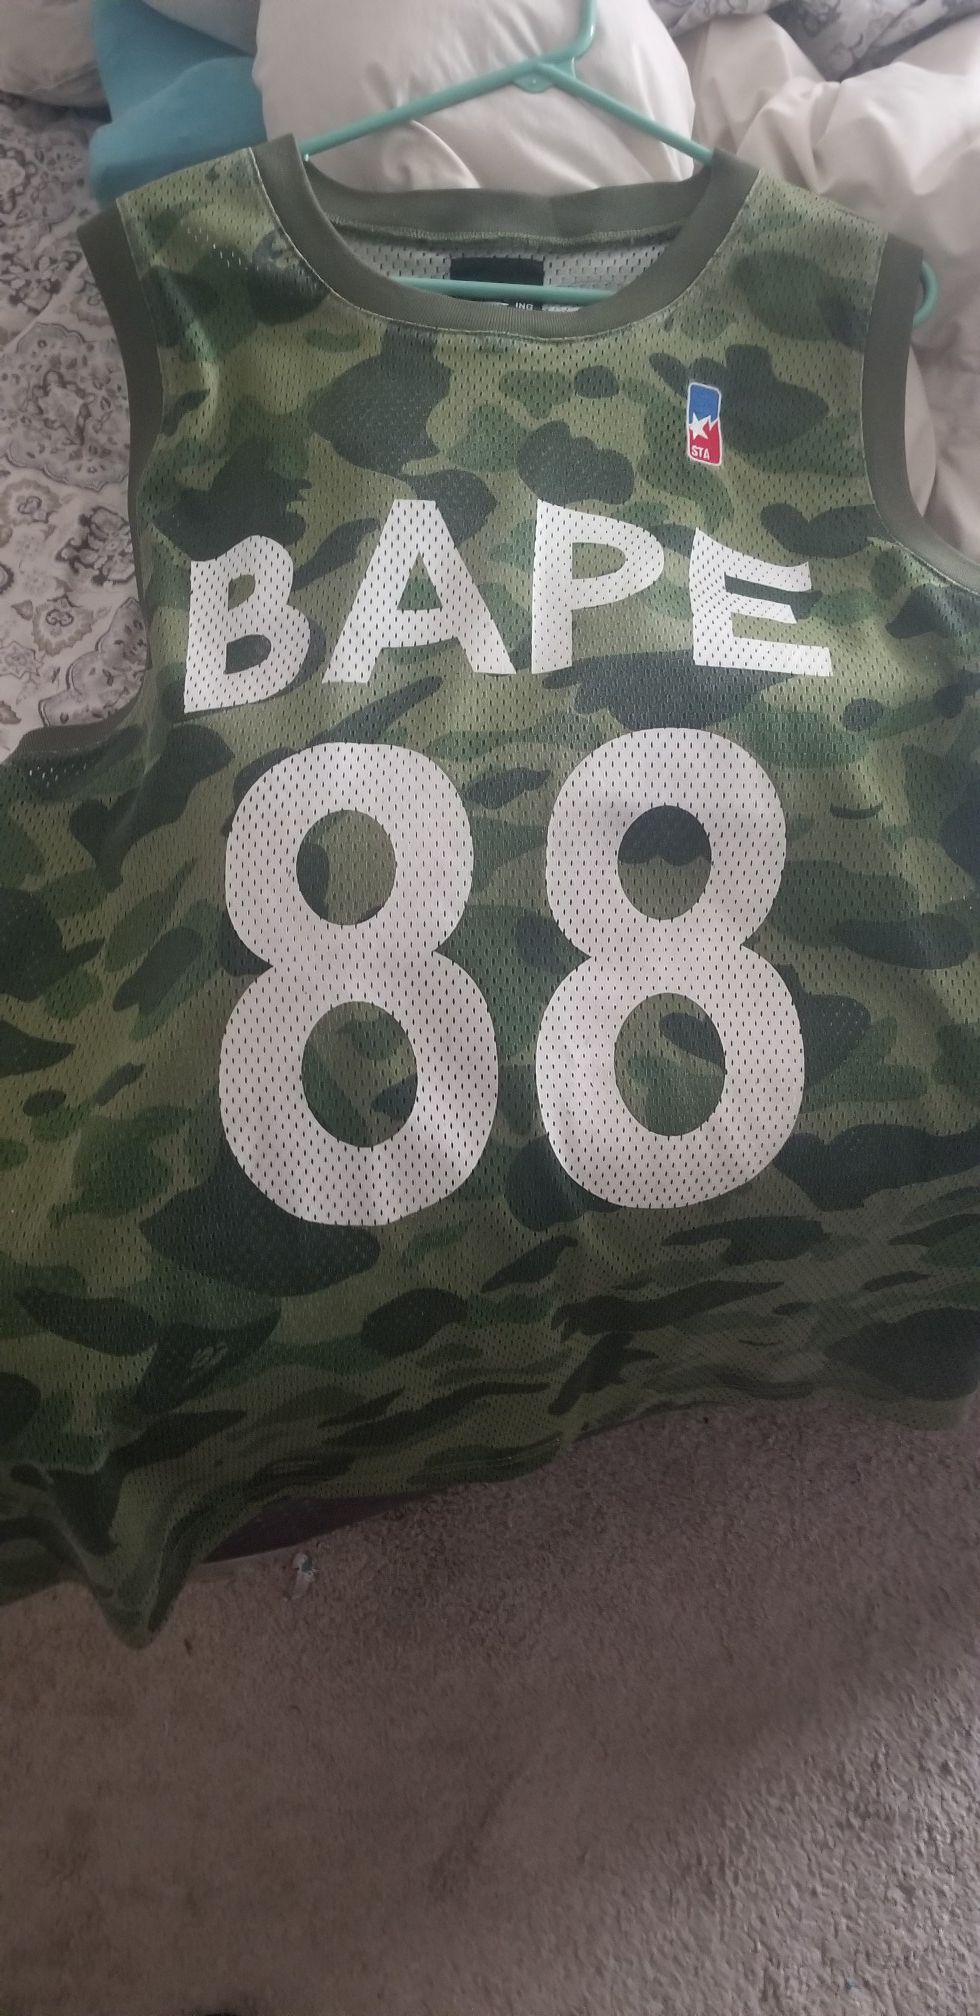 Bape 88 Tank Top